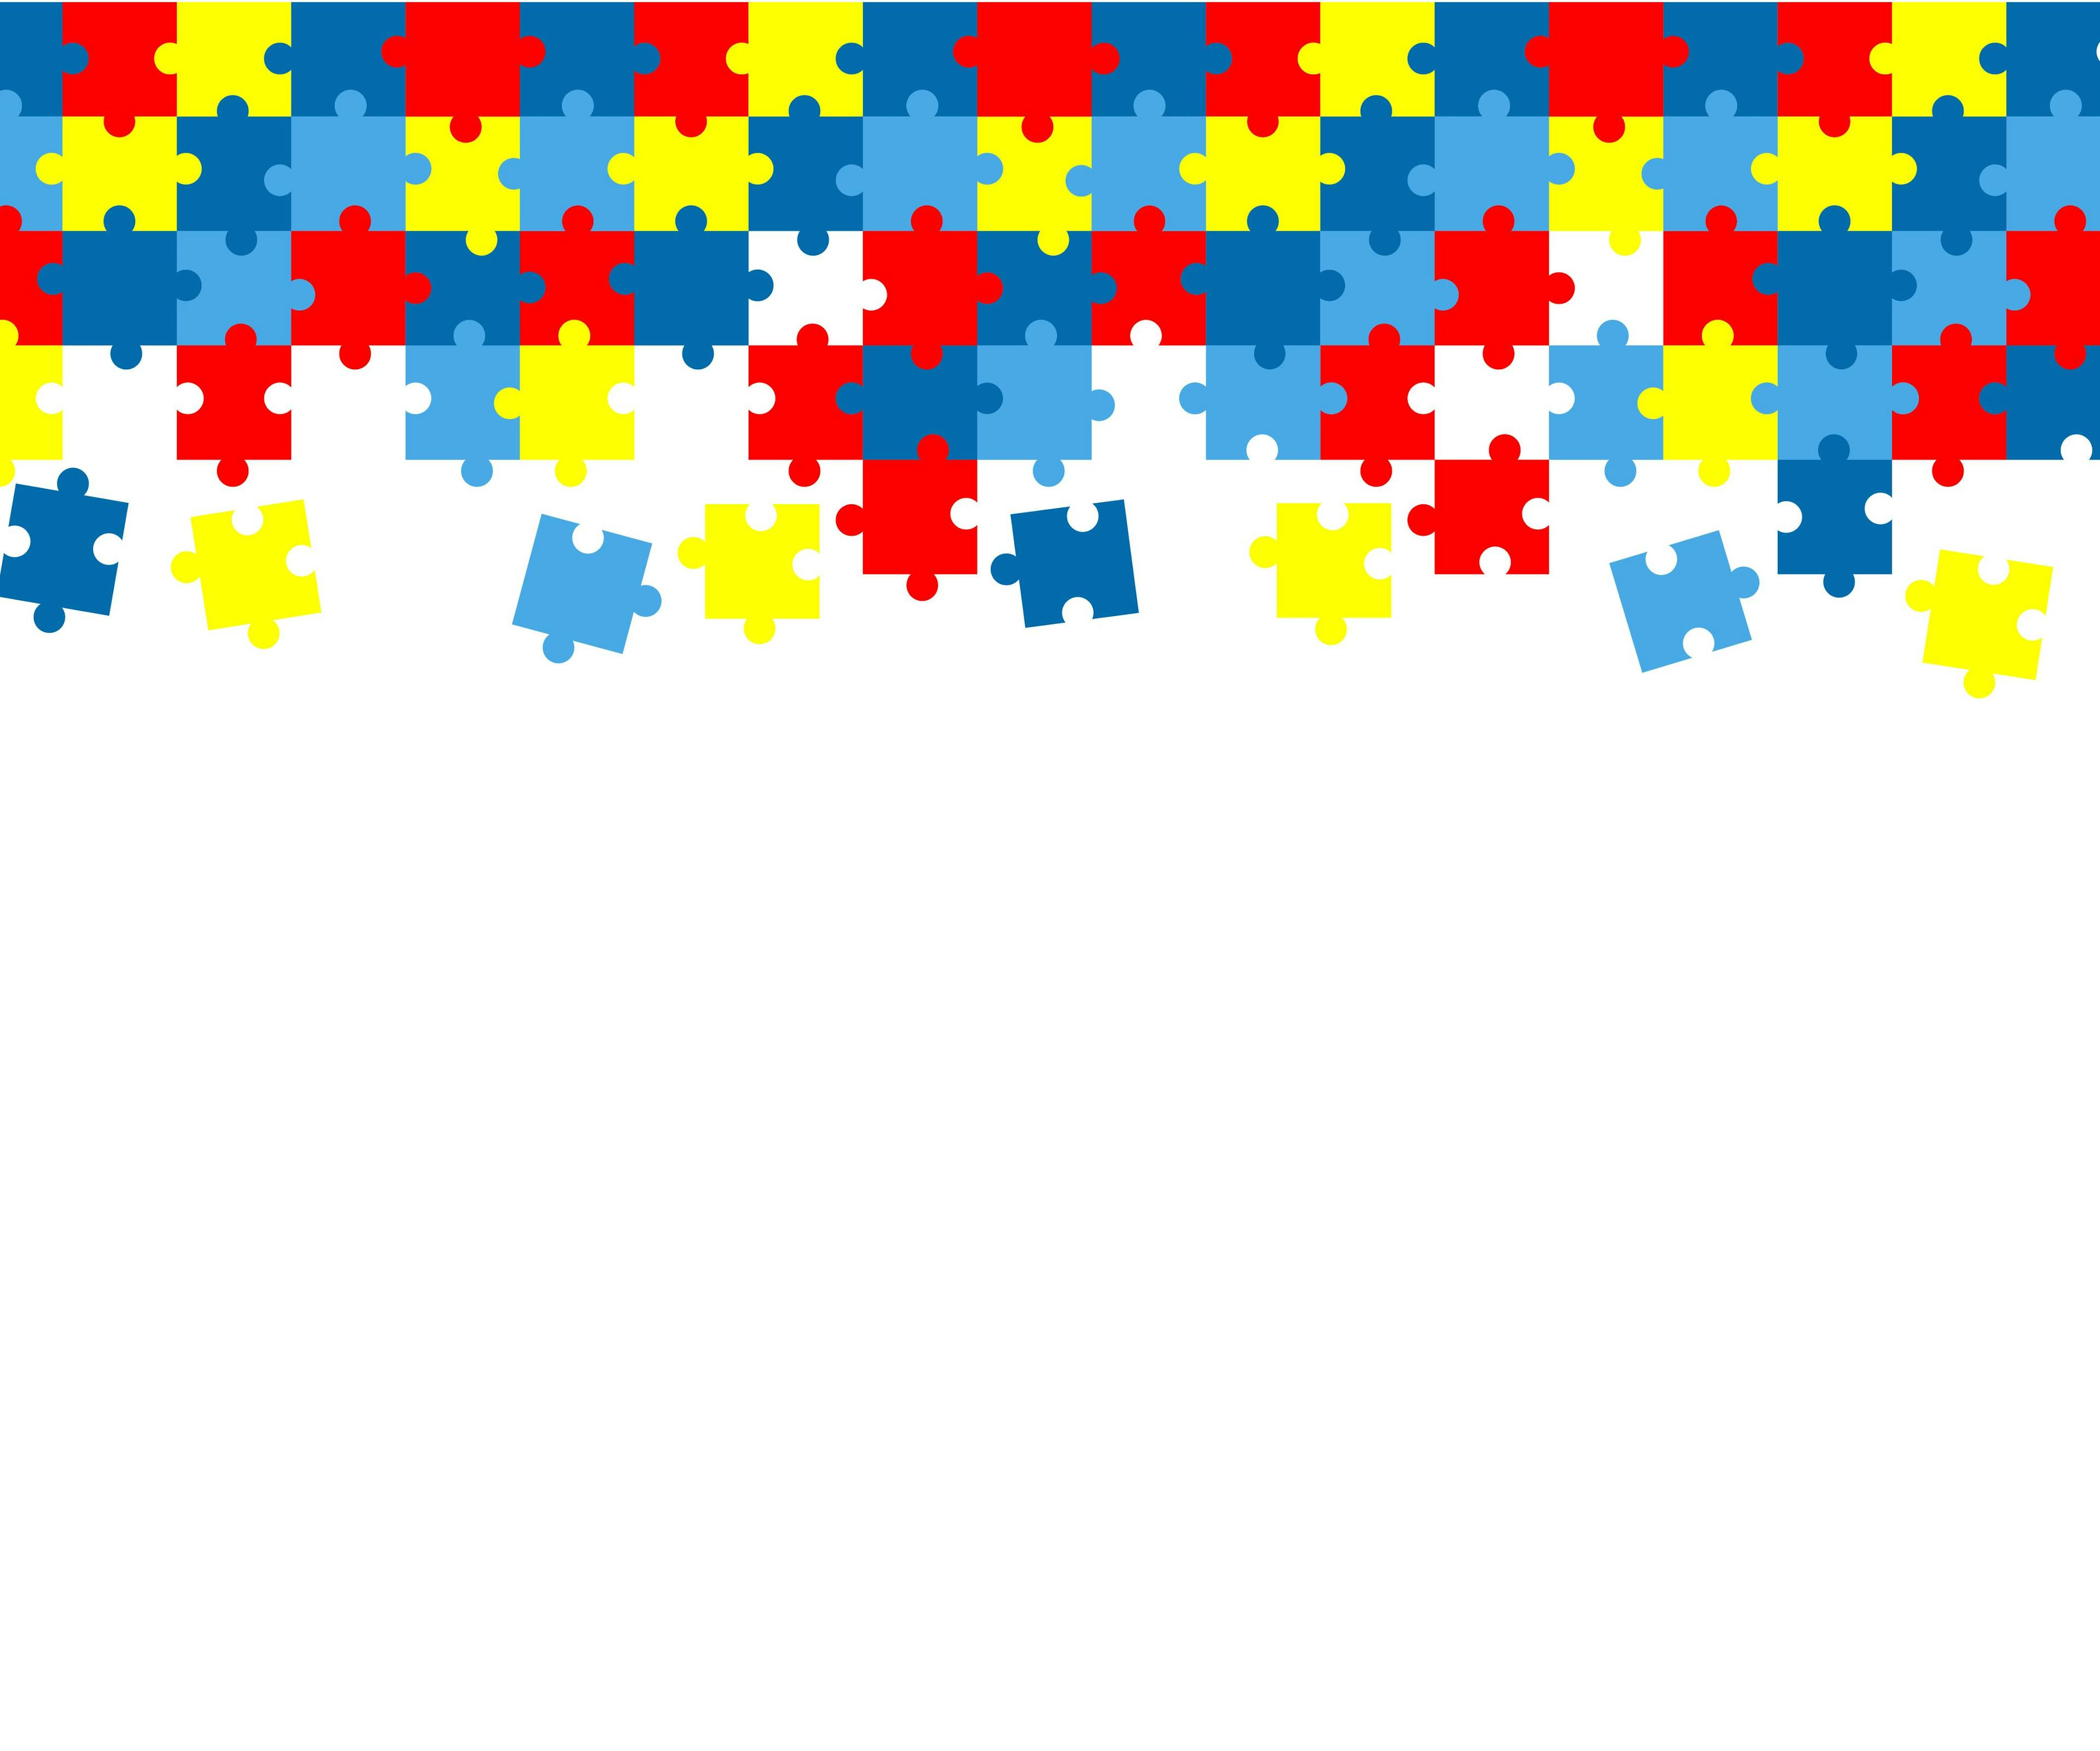 Autism awareness puzzle | Image Credit: © designervector - © designervector - stock.adobe.com.